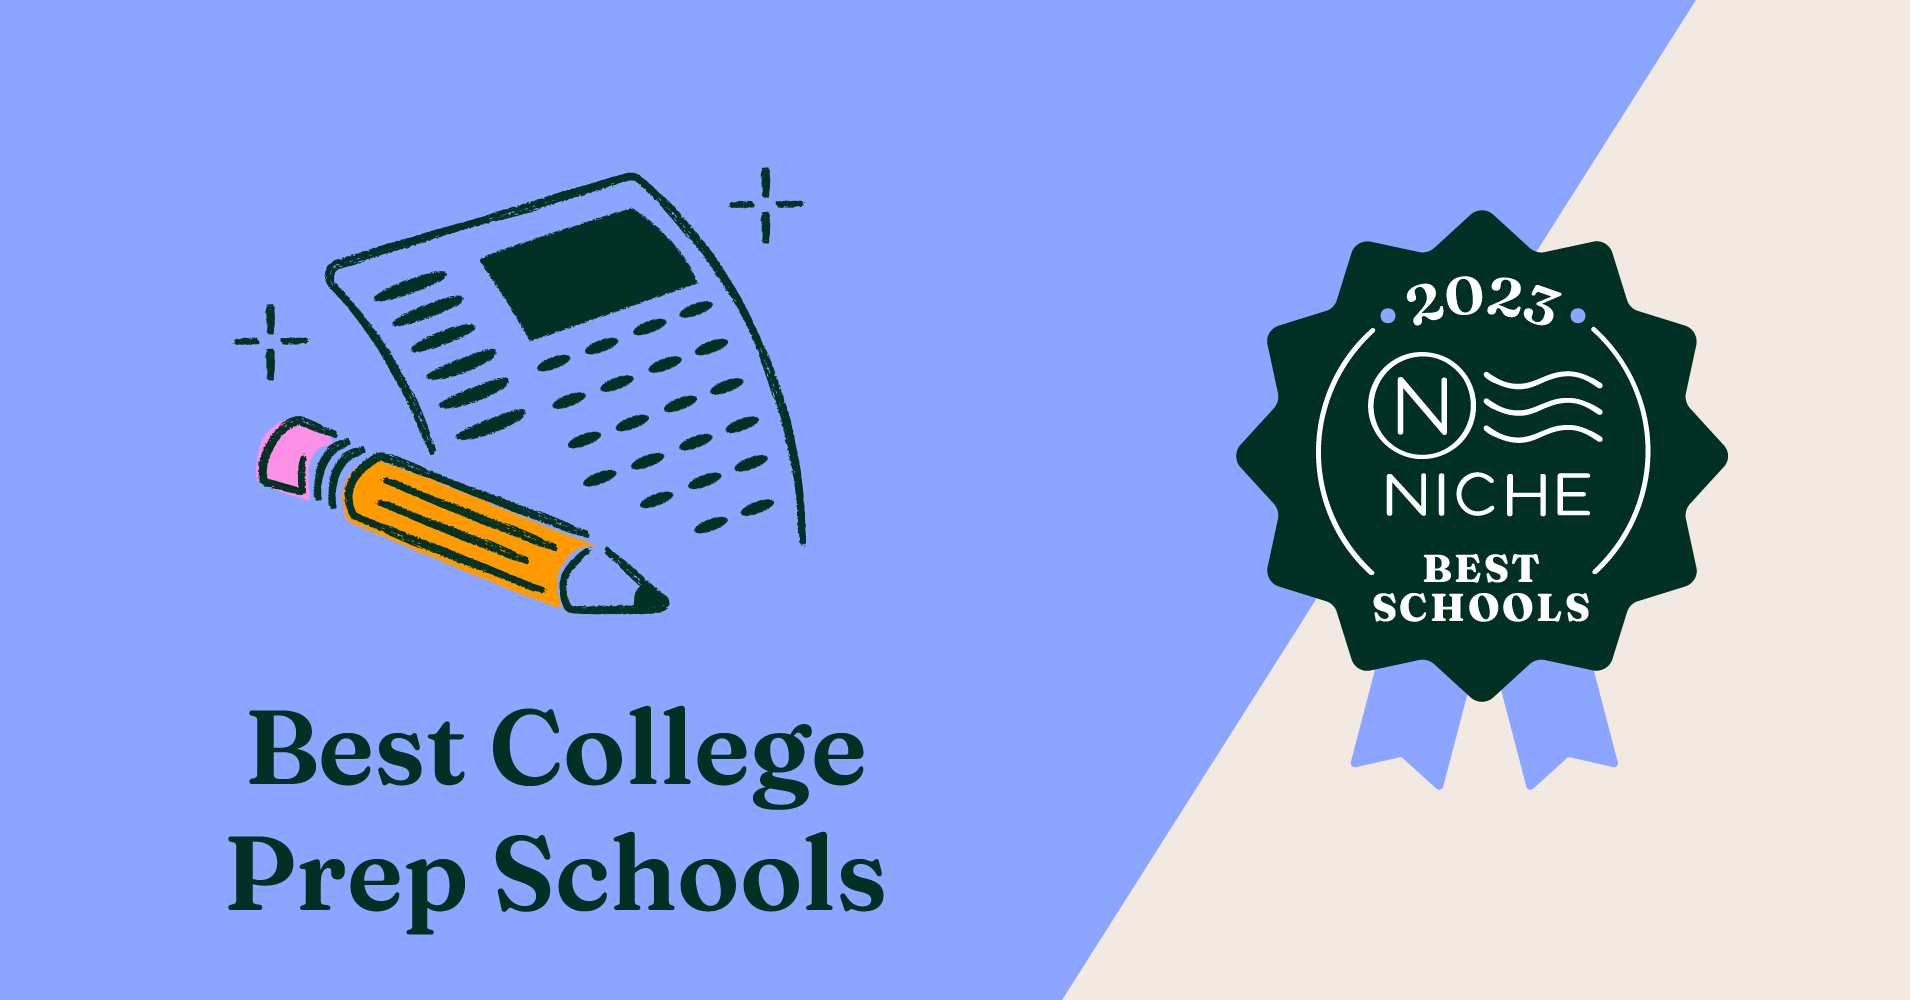 Ranked Best College Prep School by Niche.com